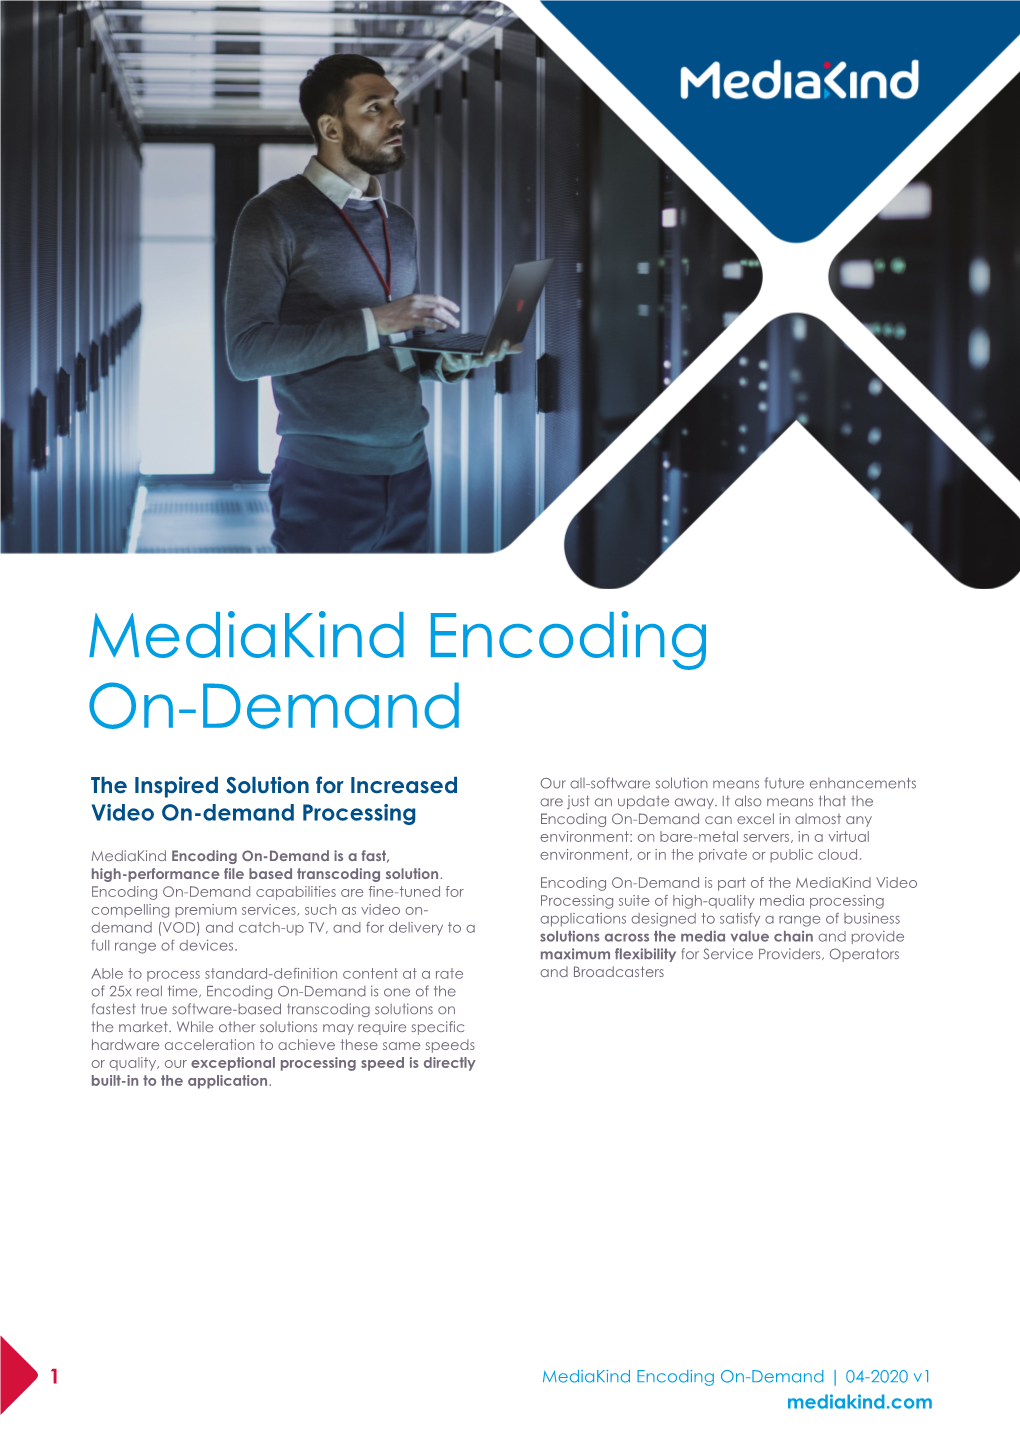 Mediakind Encoding On-Demand